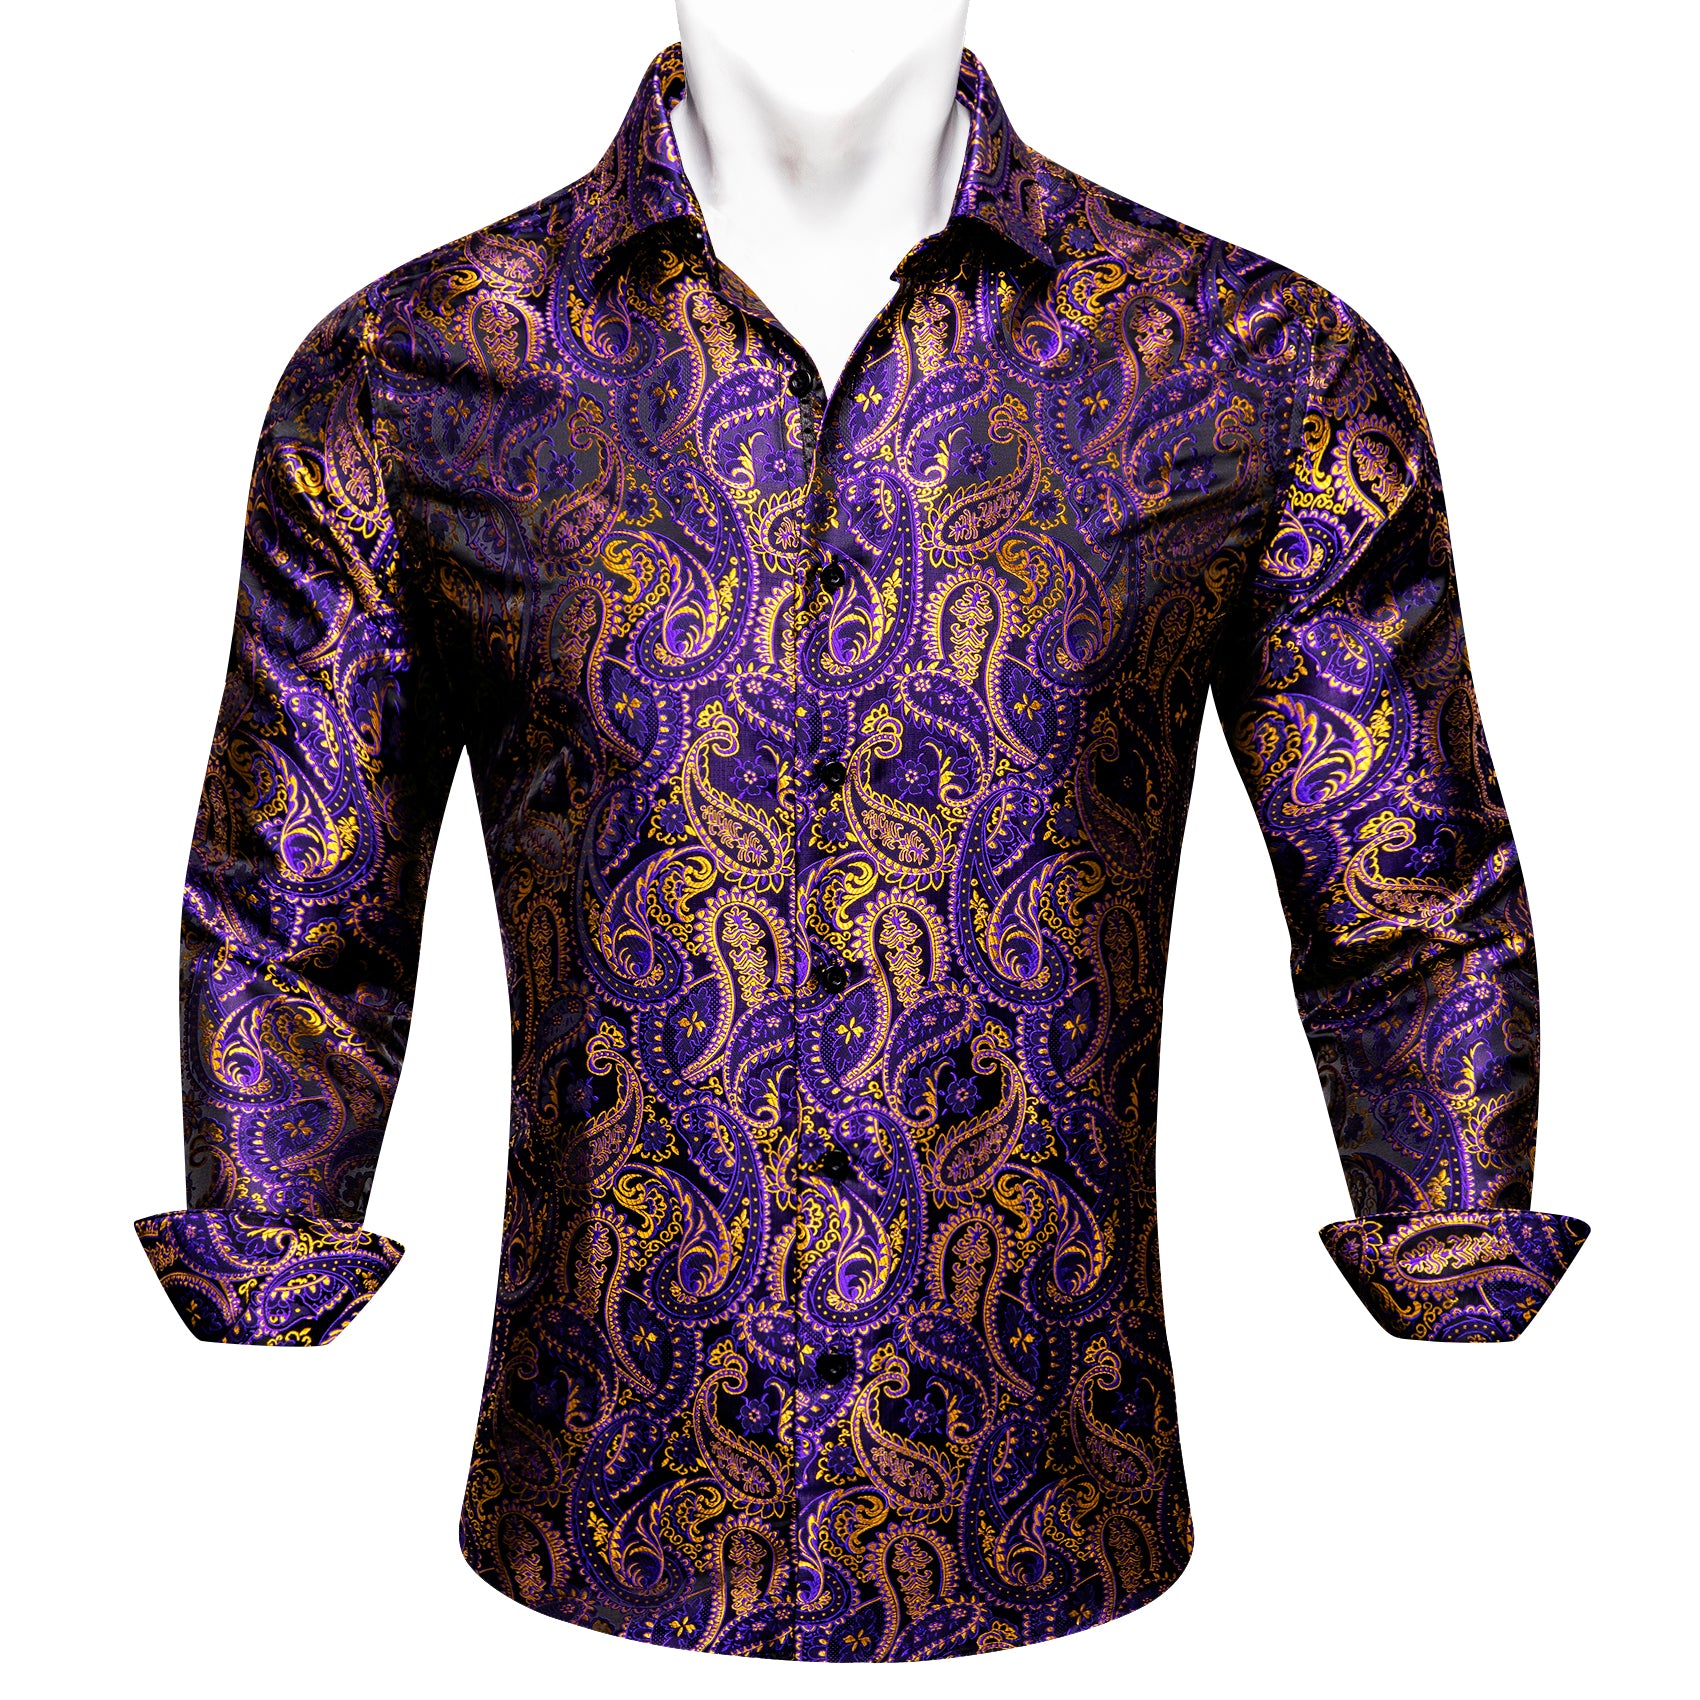 Barry.wang Purple Gold Paisley Men's Silk Shirt